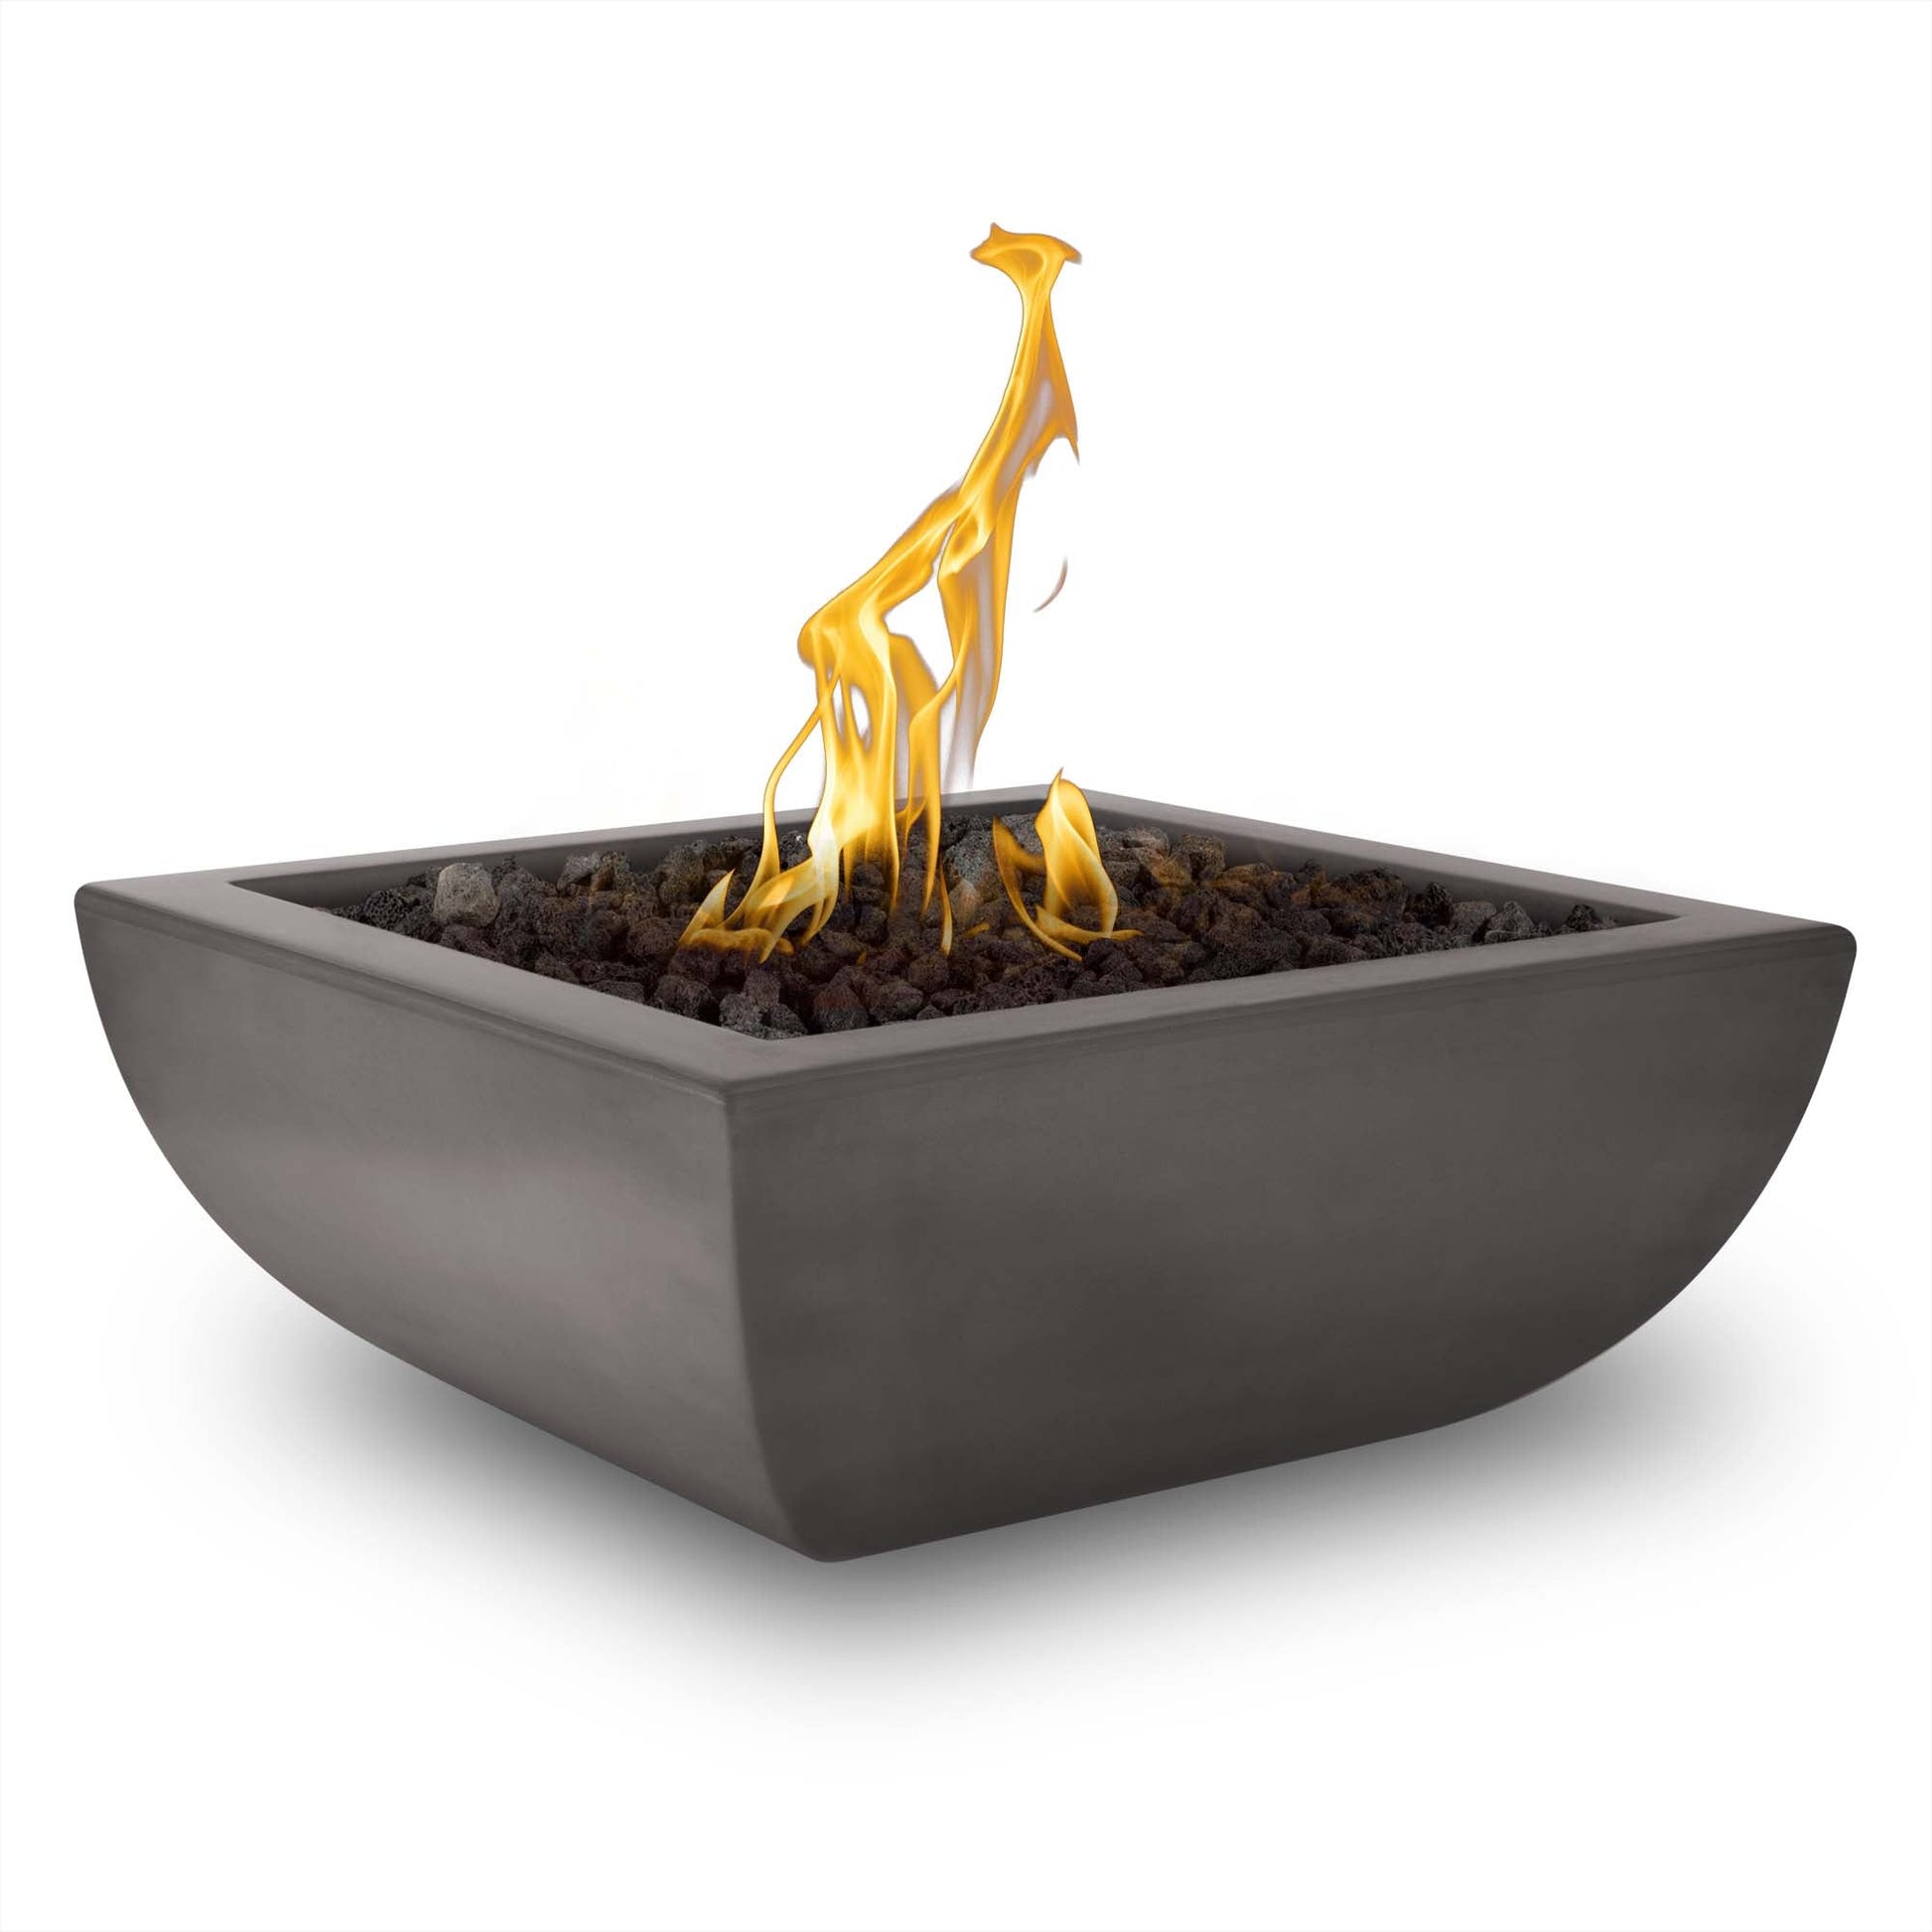 The Outdoor Plus Square Avalon 36" Metallic Bronze GFRC Concrete Liquid Propane Fire Bowl with Match Lit with Flame Sense Ignition